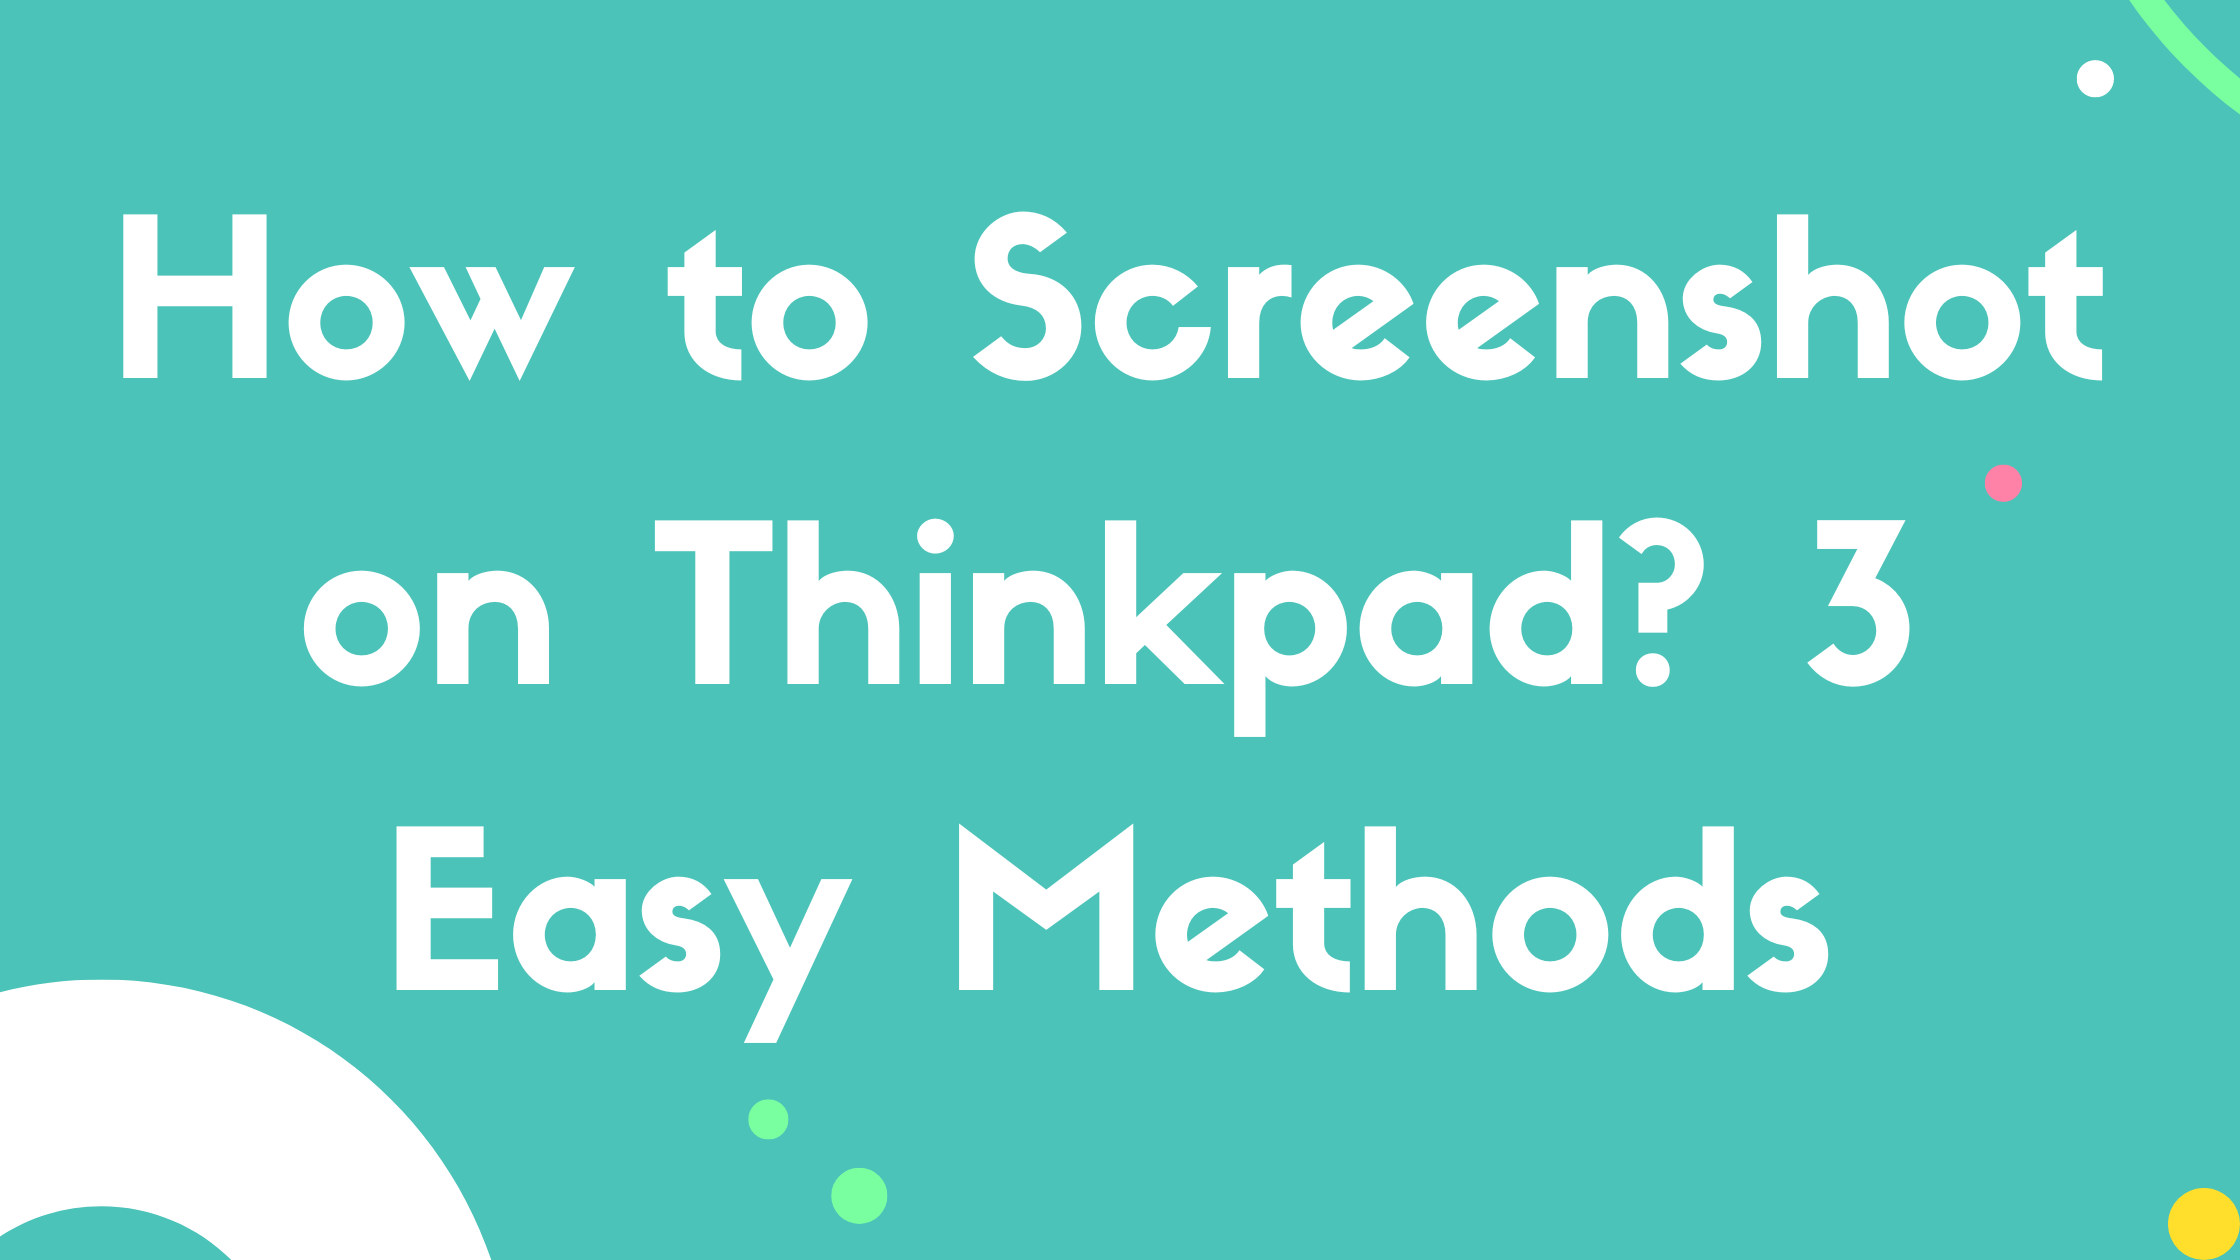 How to Screenshot on Thinkpad? 3 Easy Methods